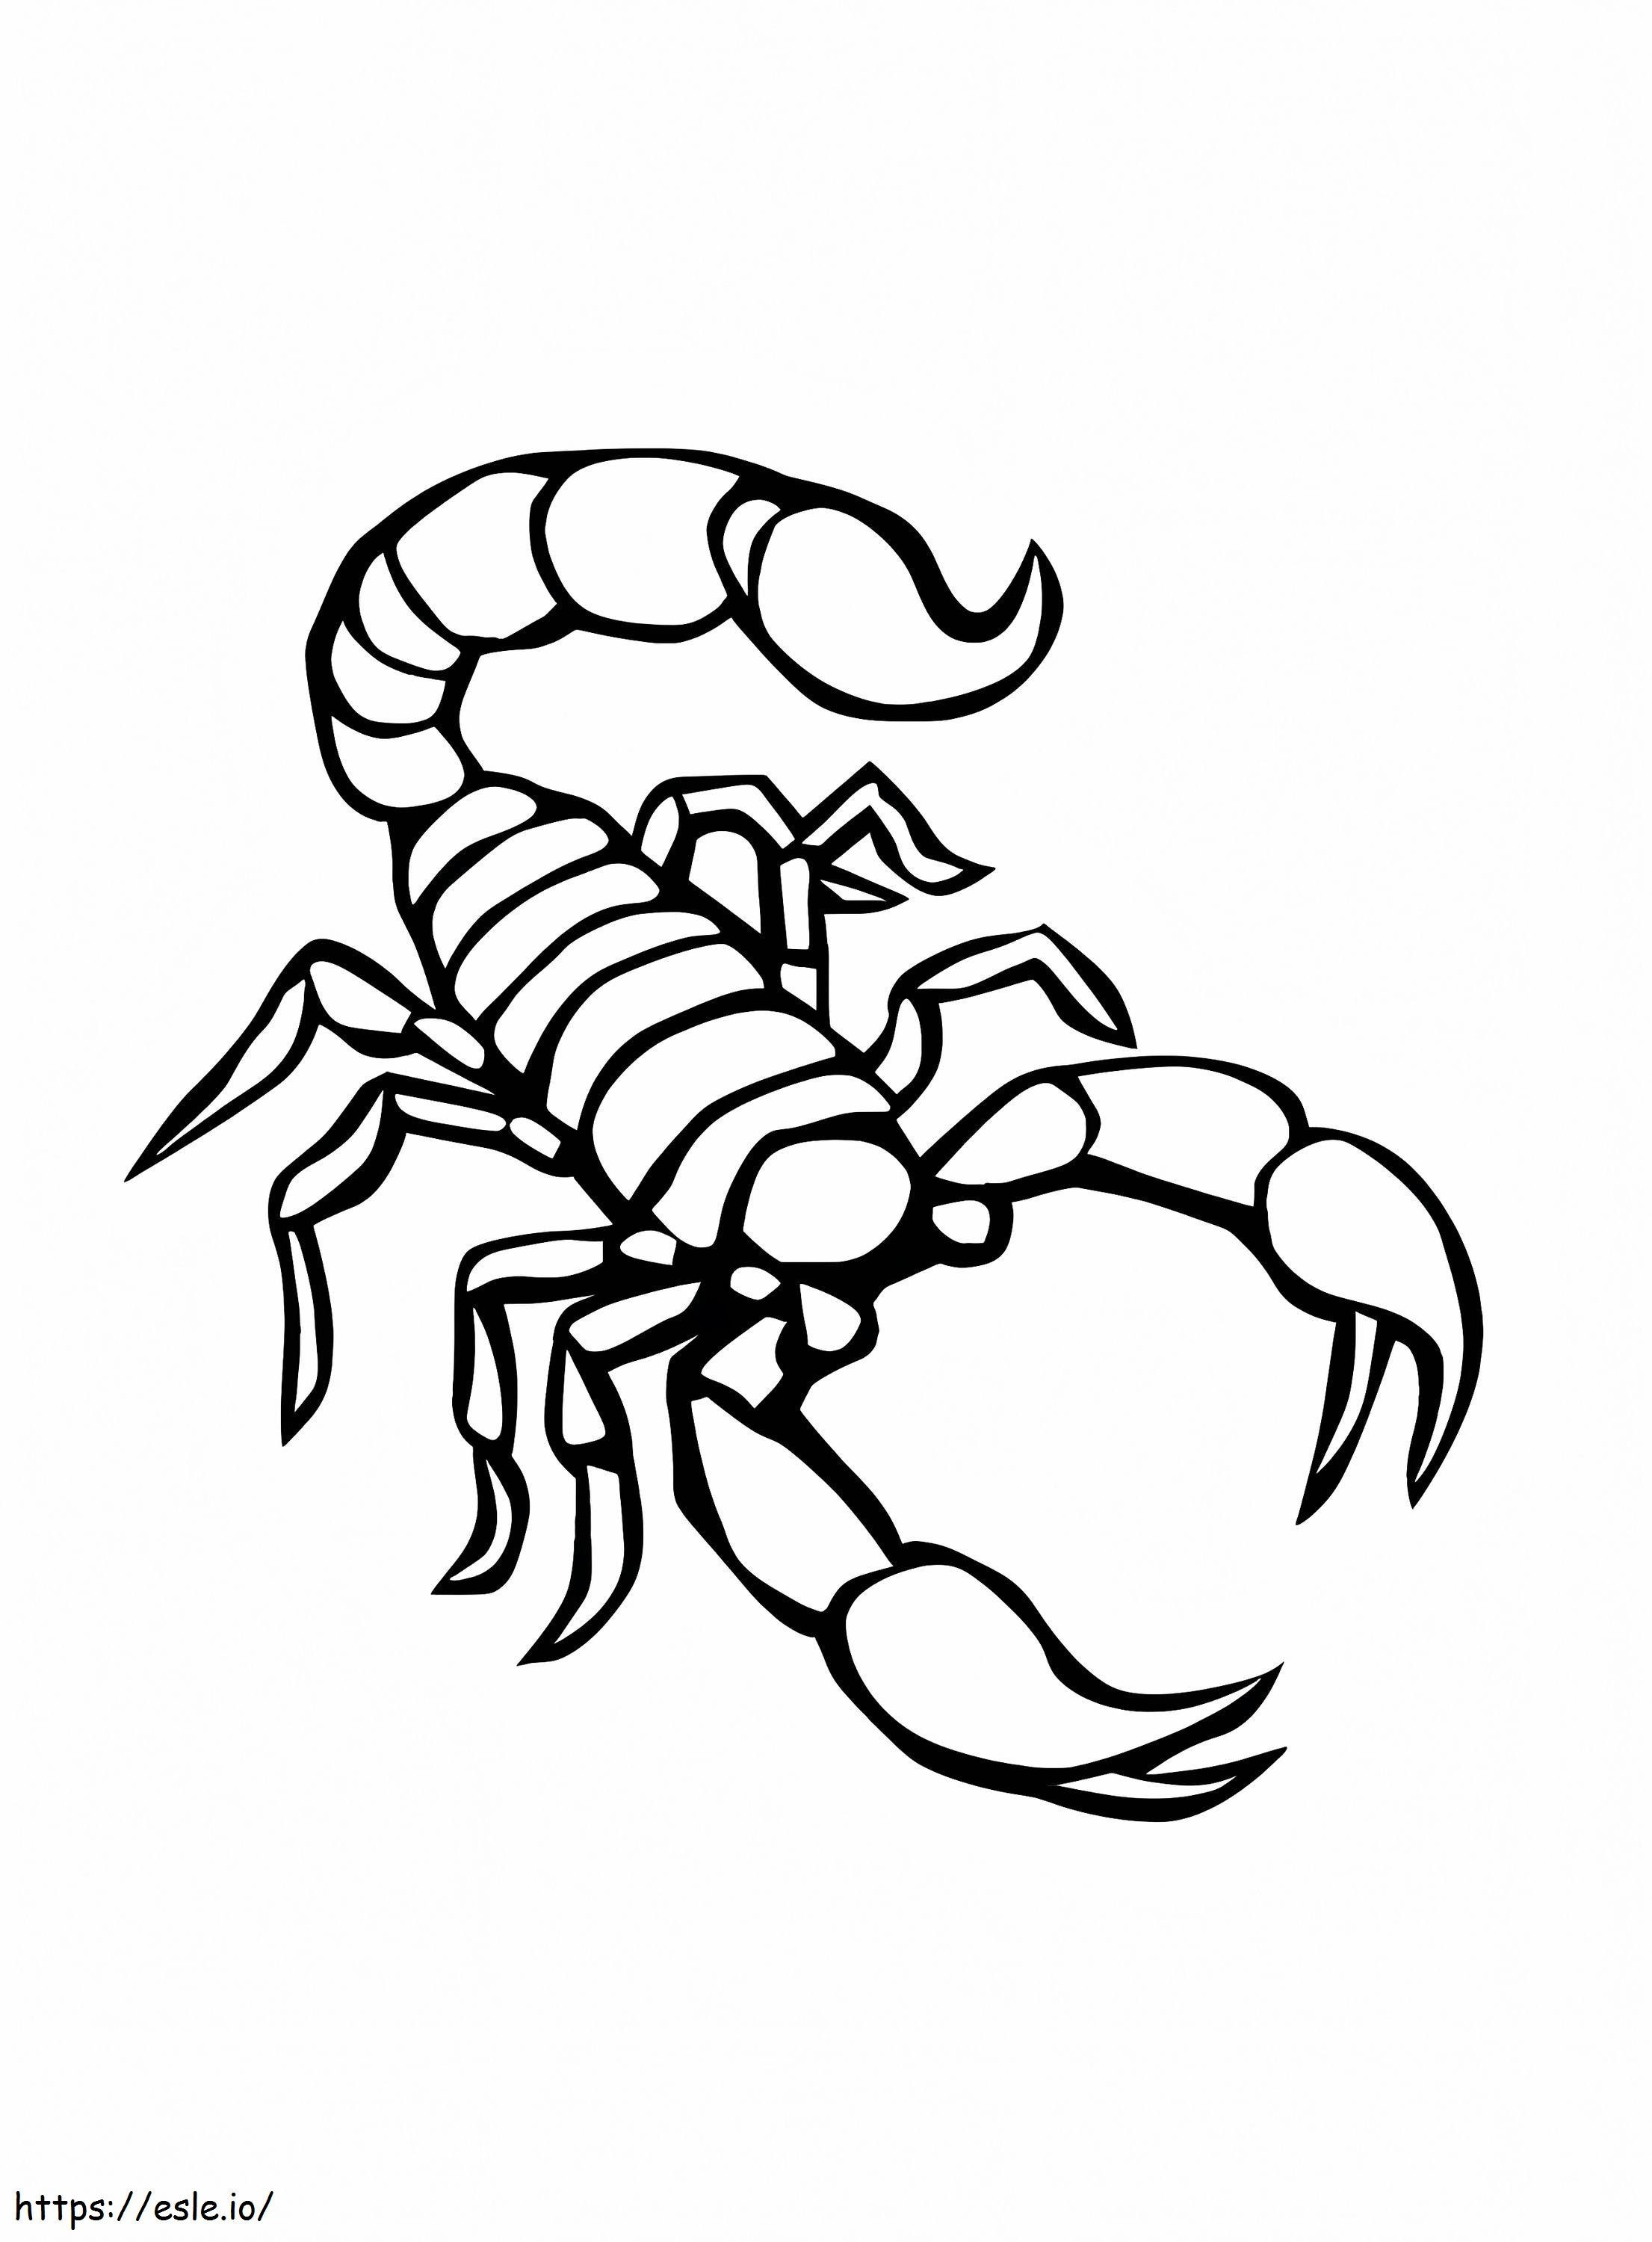 Coloriage Scorpions 2 à imprimer dessin